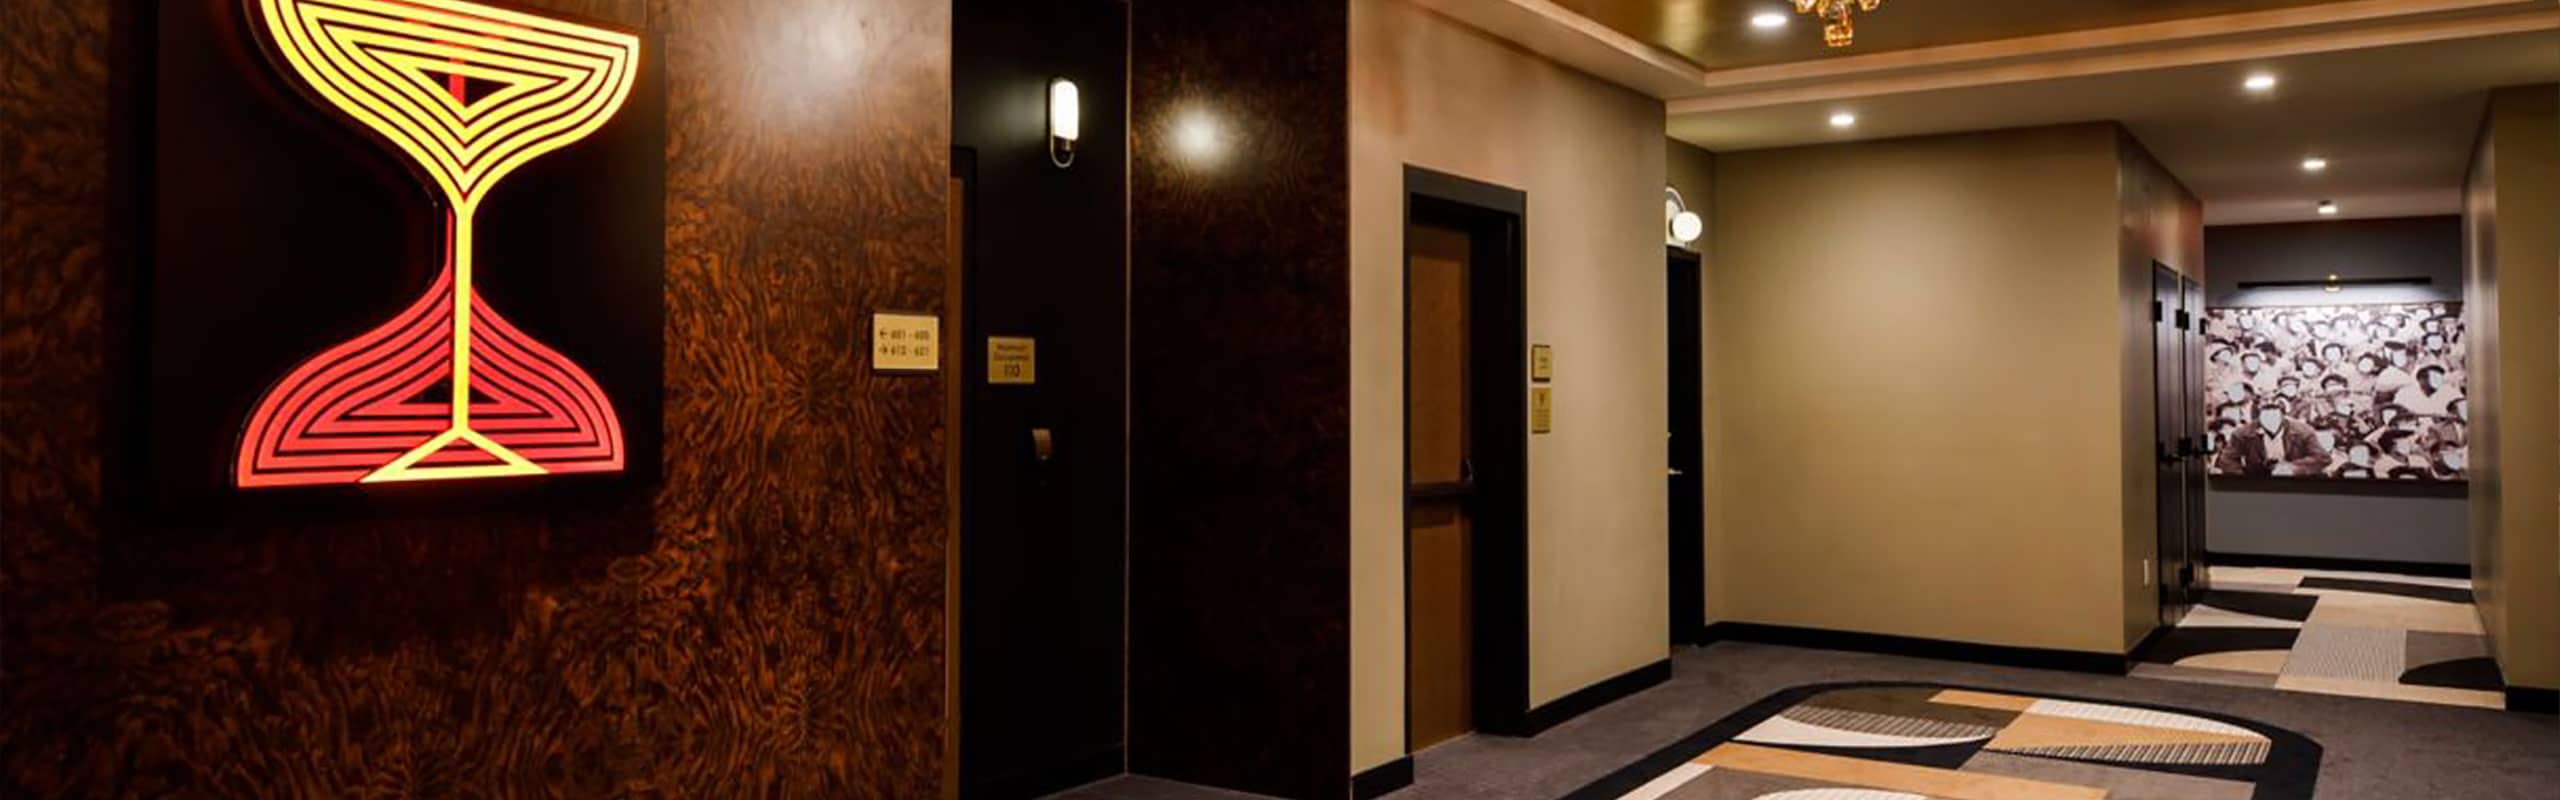 Hotel Indy -lobby elevators